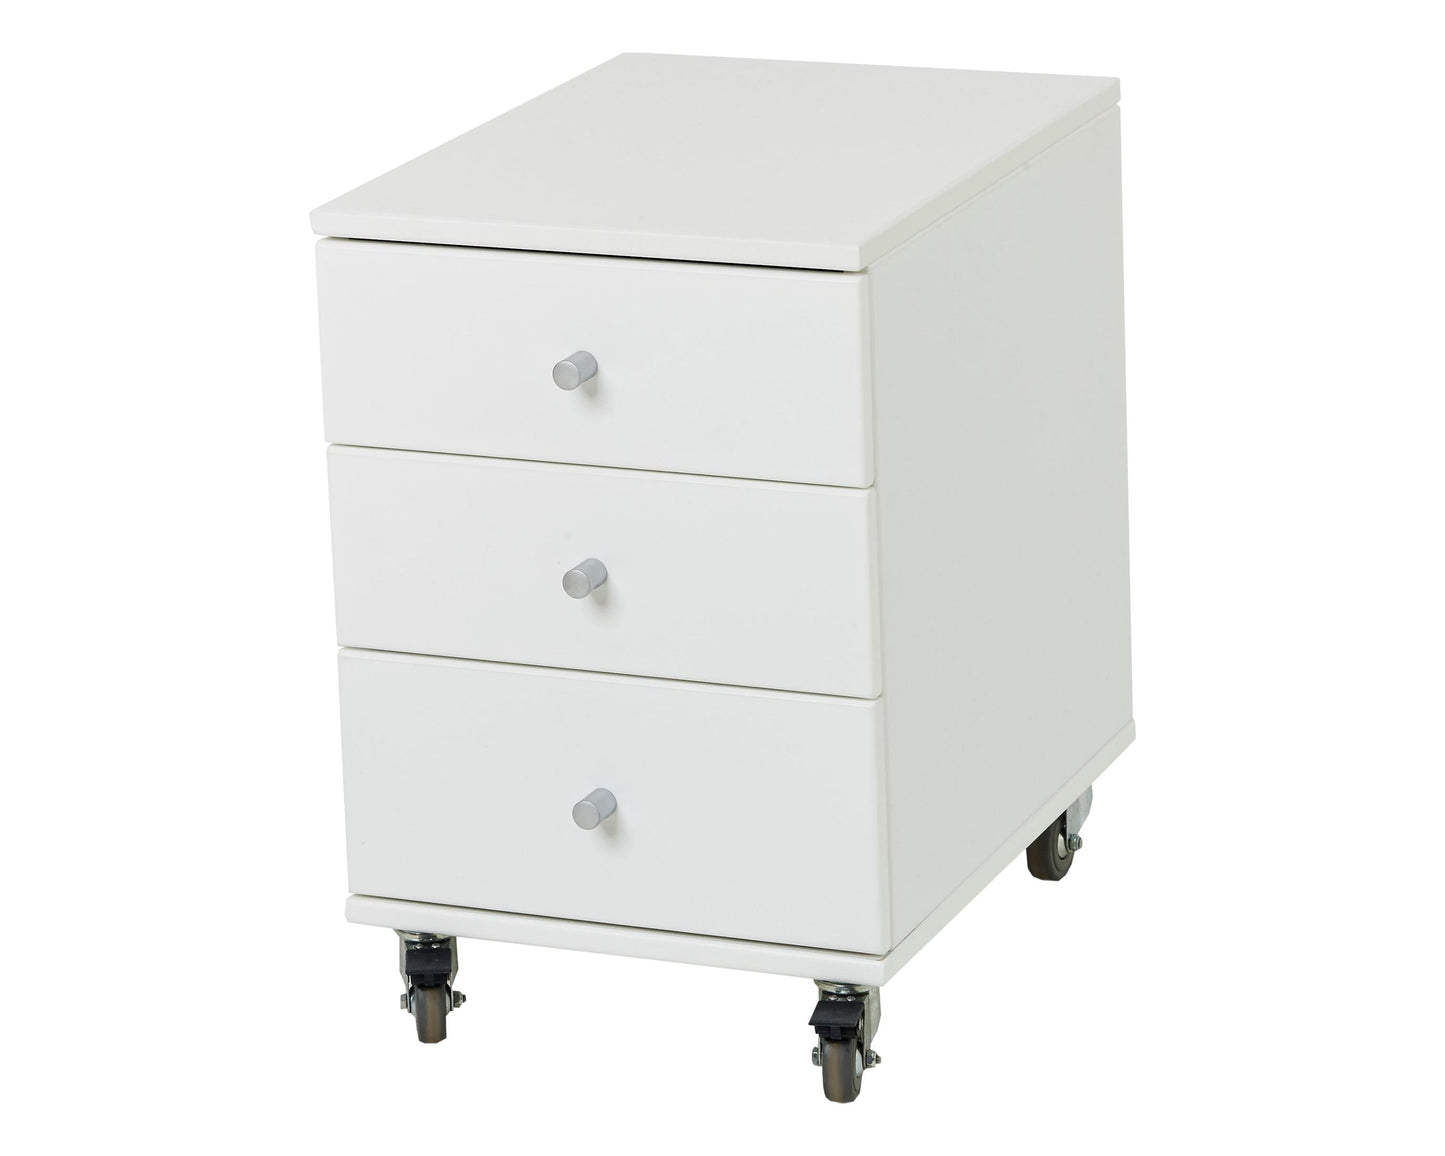 Jonas - Drawer set with 3 drawers - White